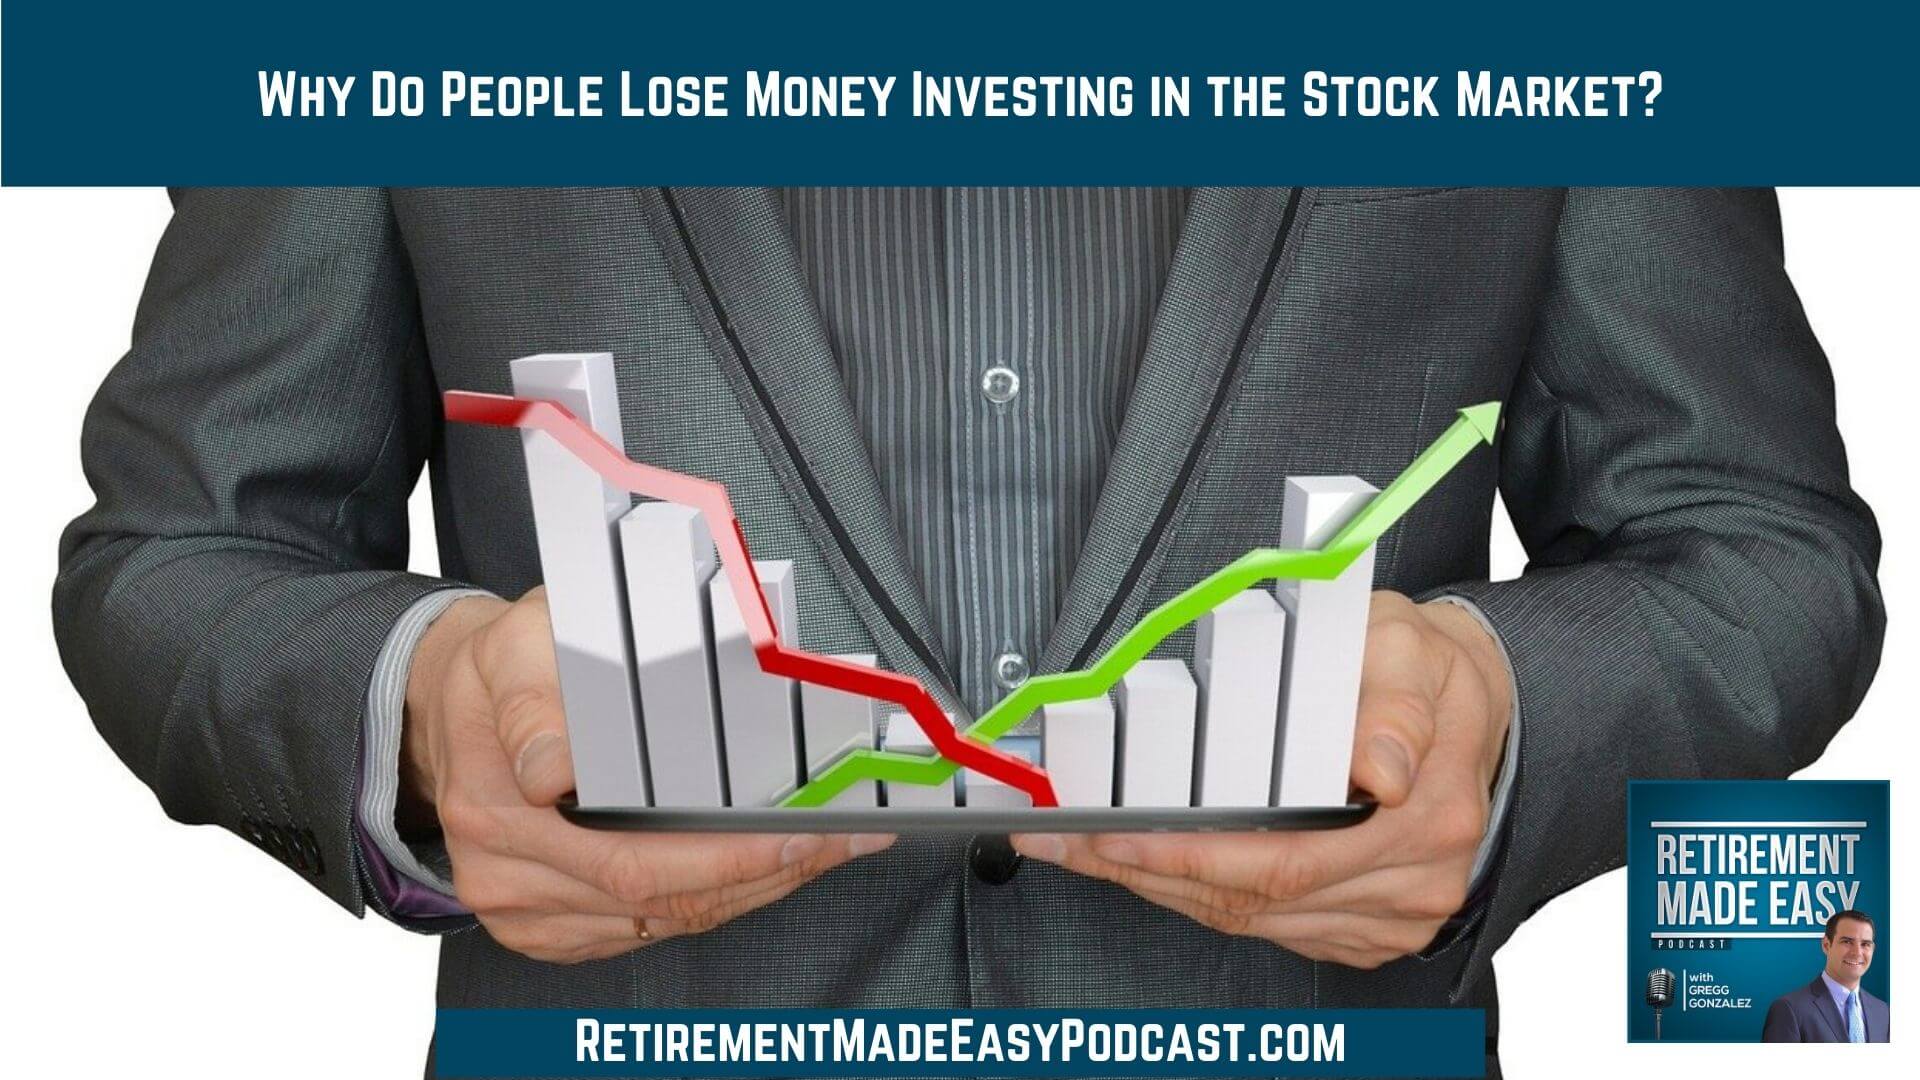 How do investors lose money in the stock market?